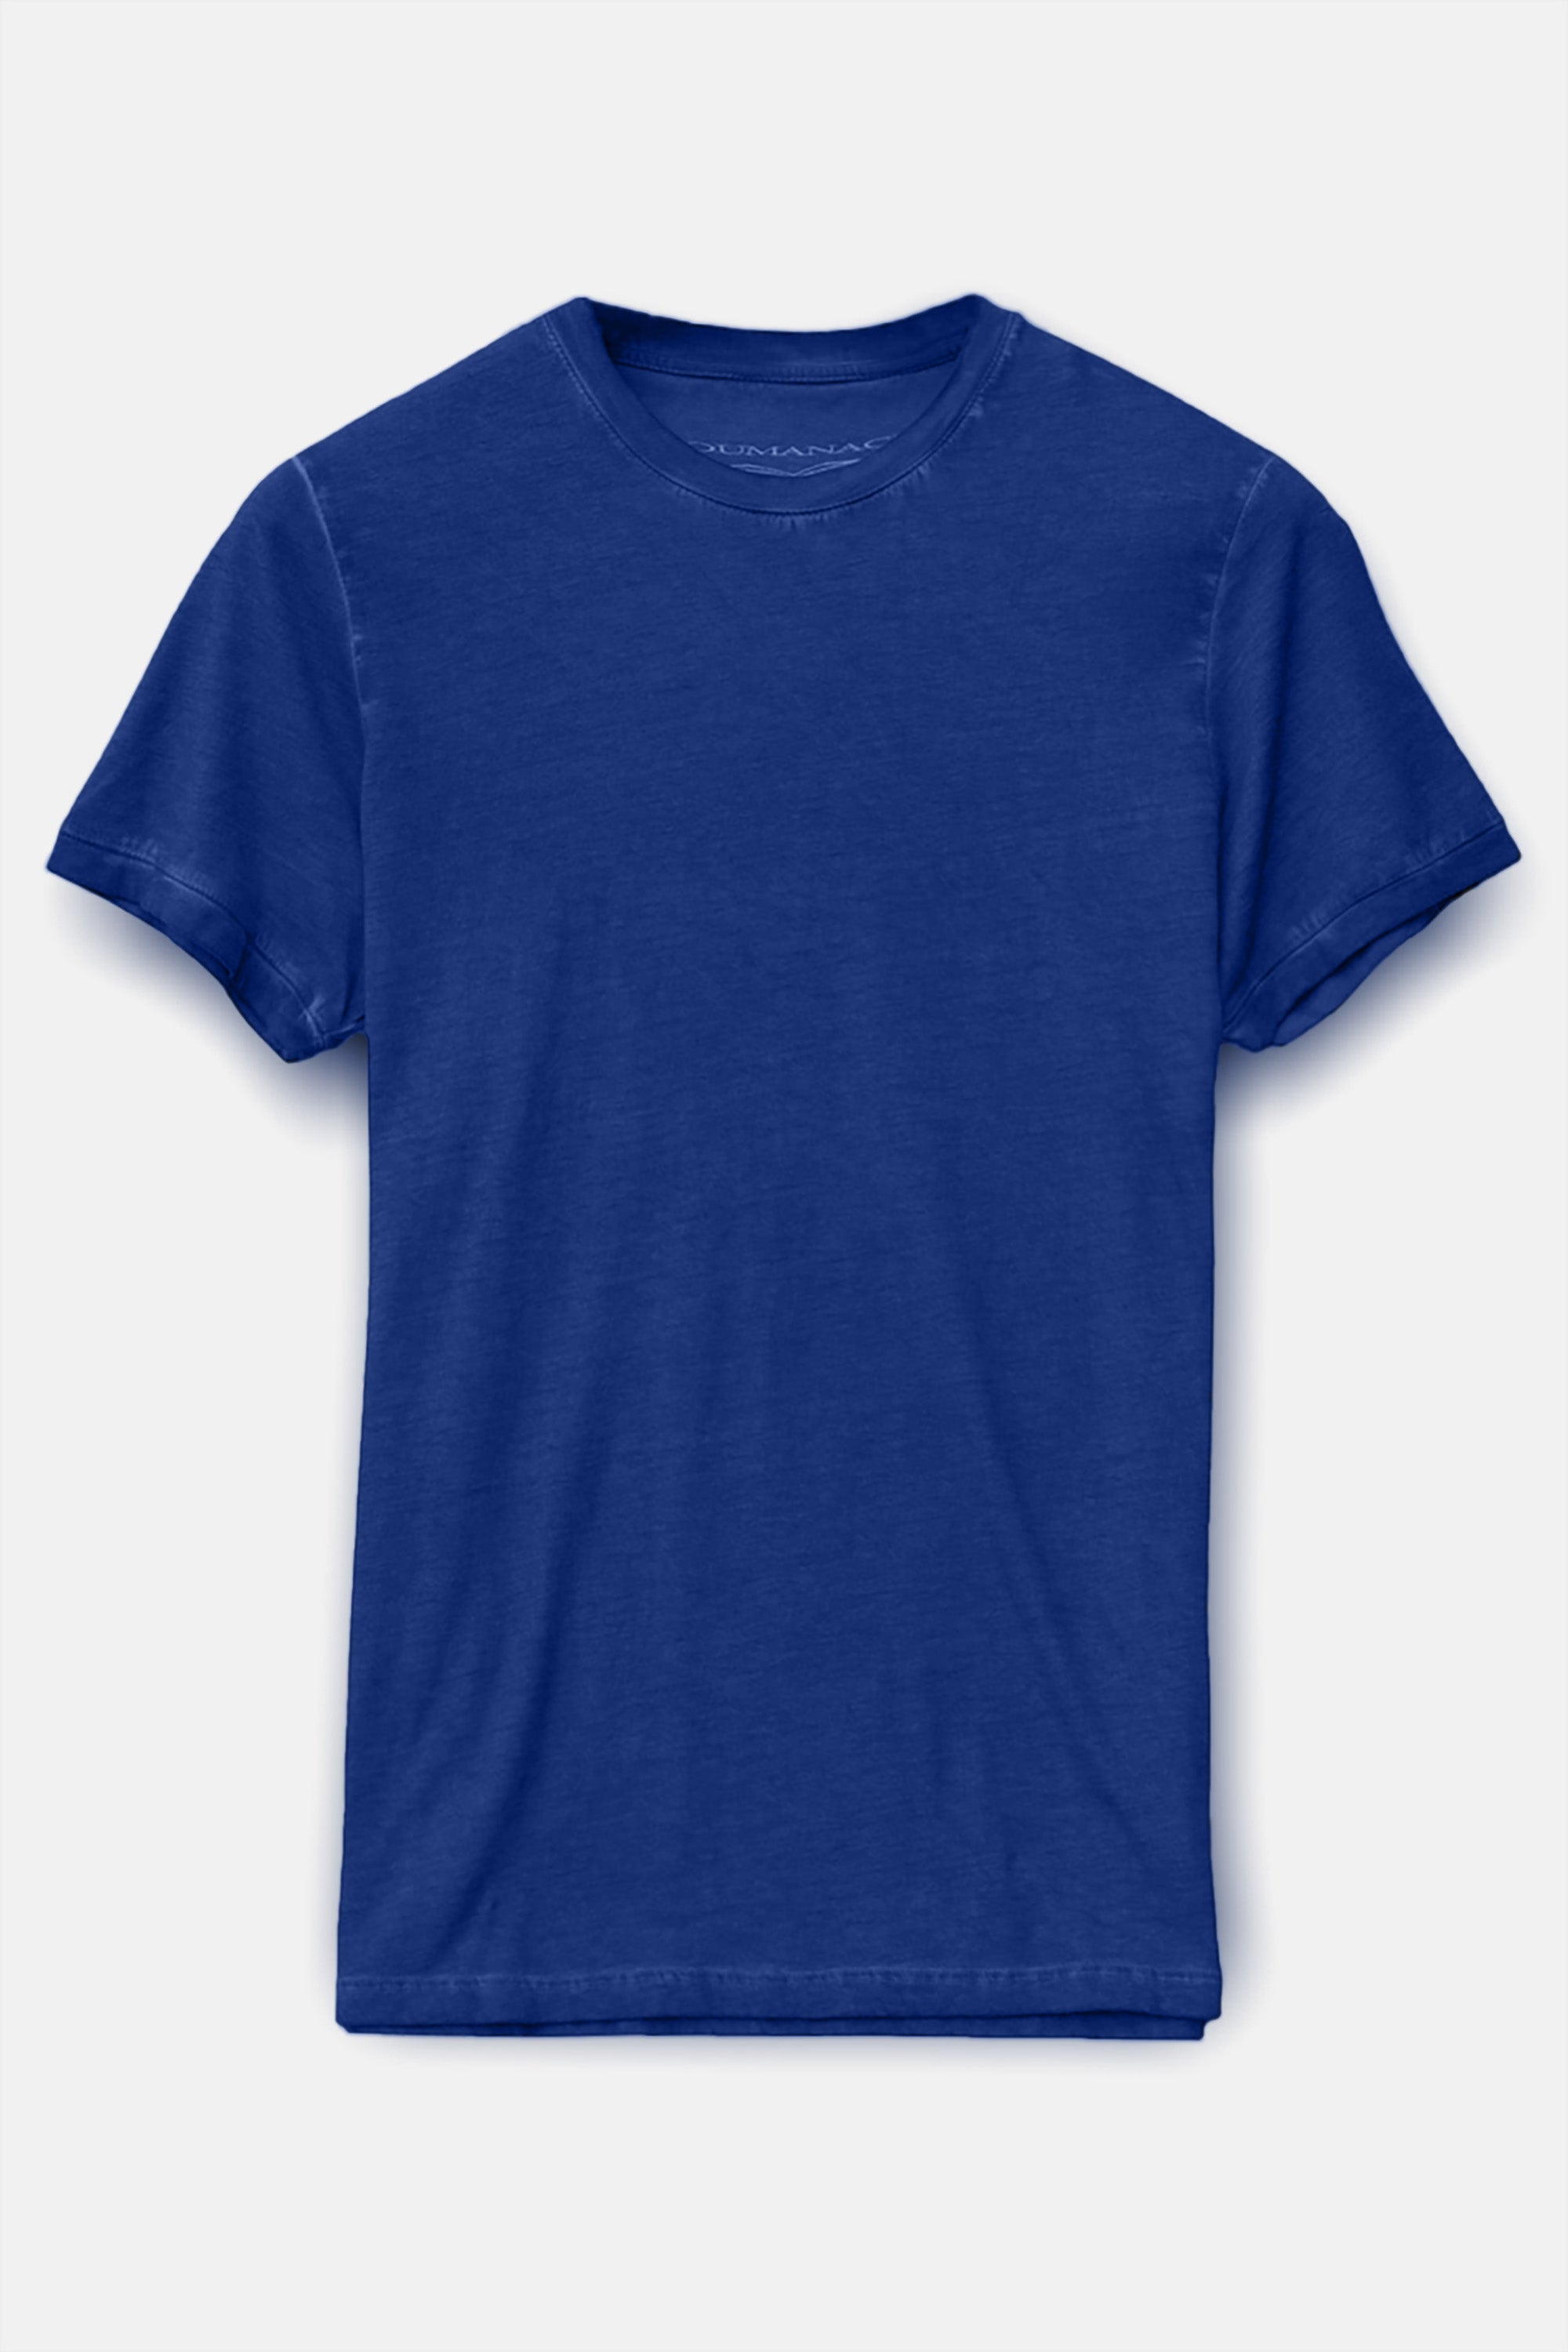 Smart Casual Cotton T-Shirt - Royal